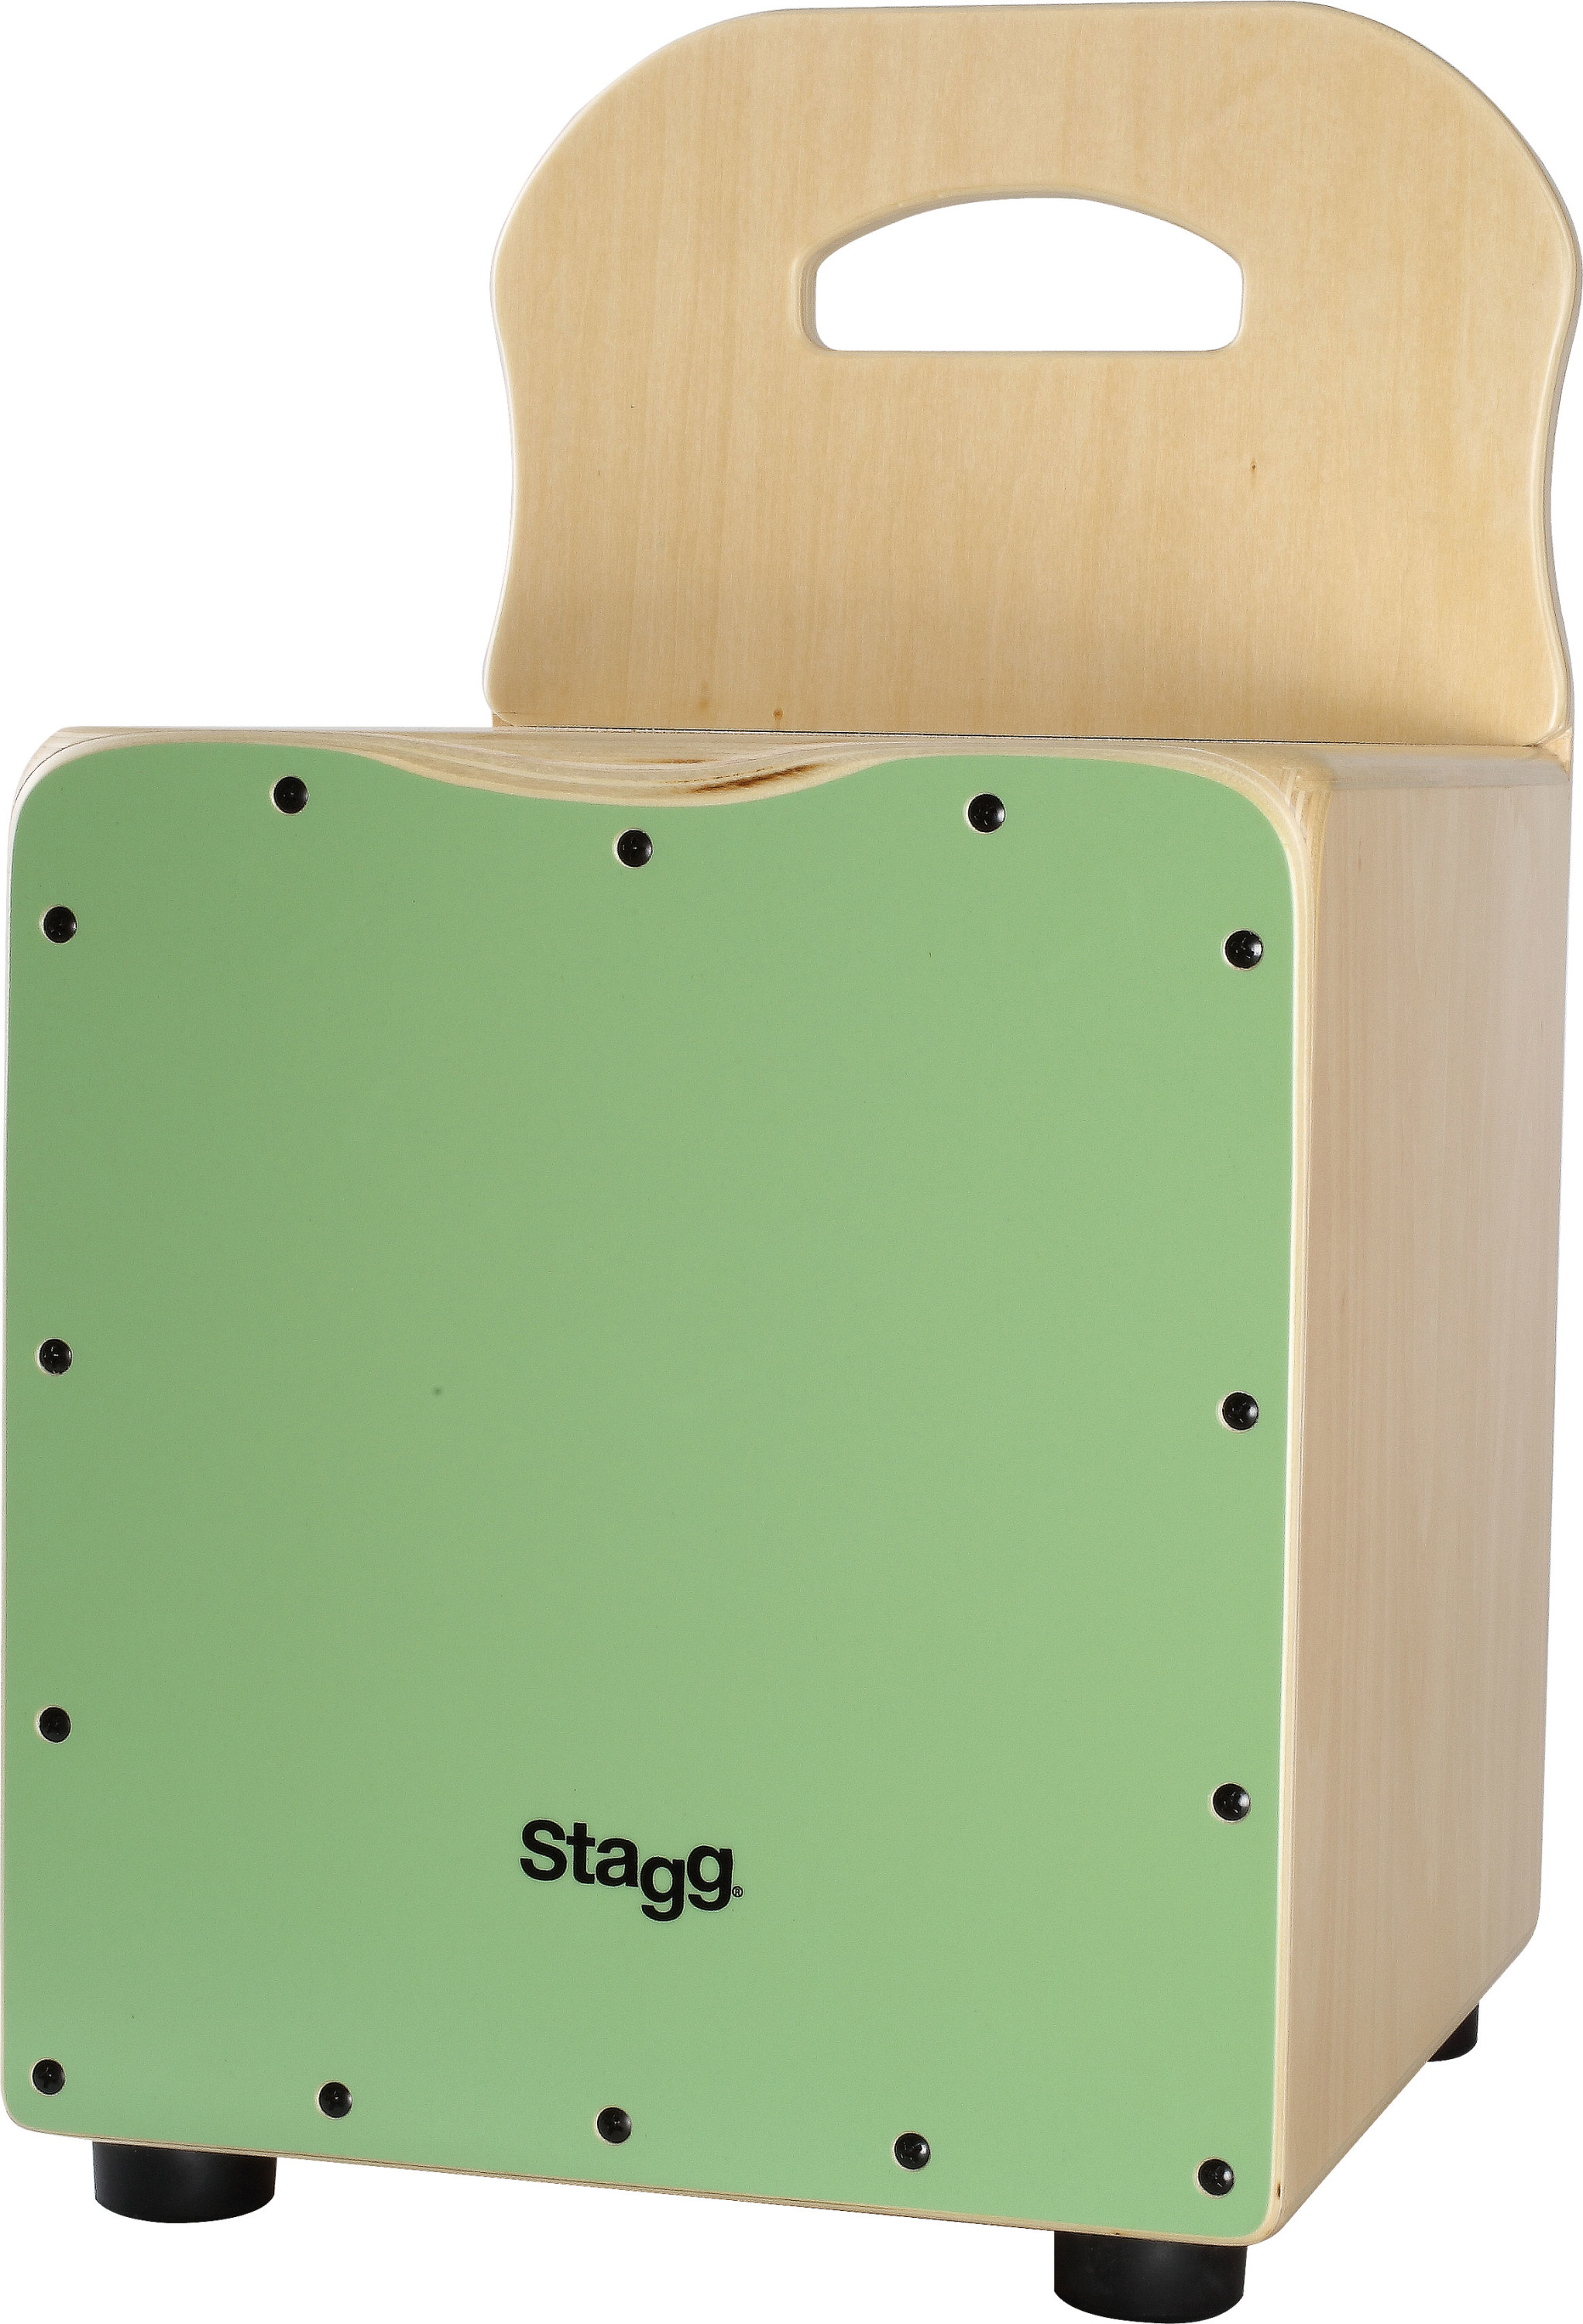 Stagg Easygo Cajon Enfant Vert - Percusión para golpear - Variation 1